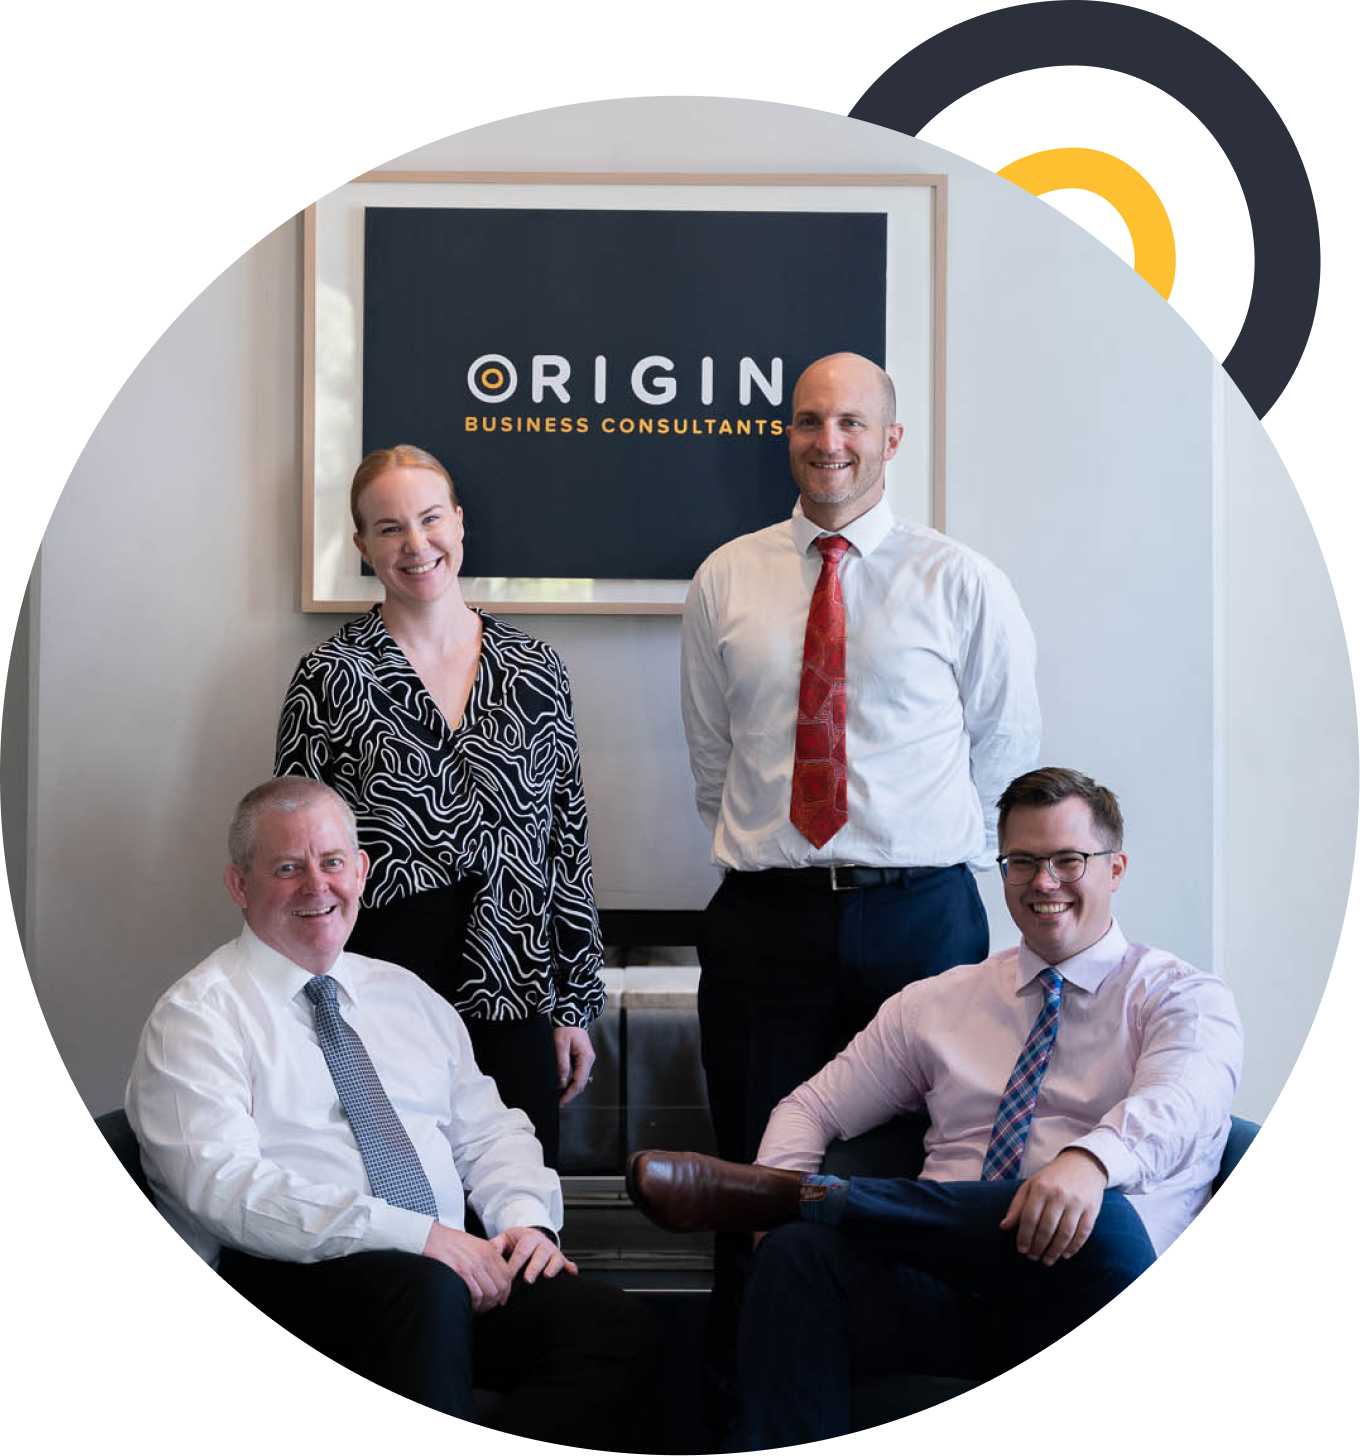 We're Origin Business Consultants